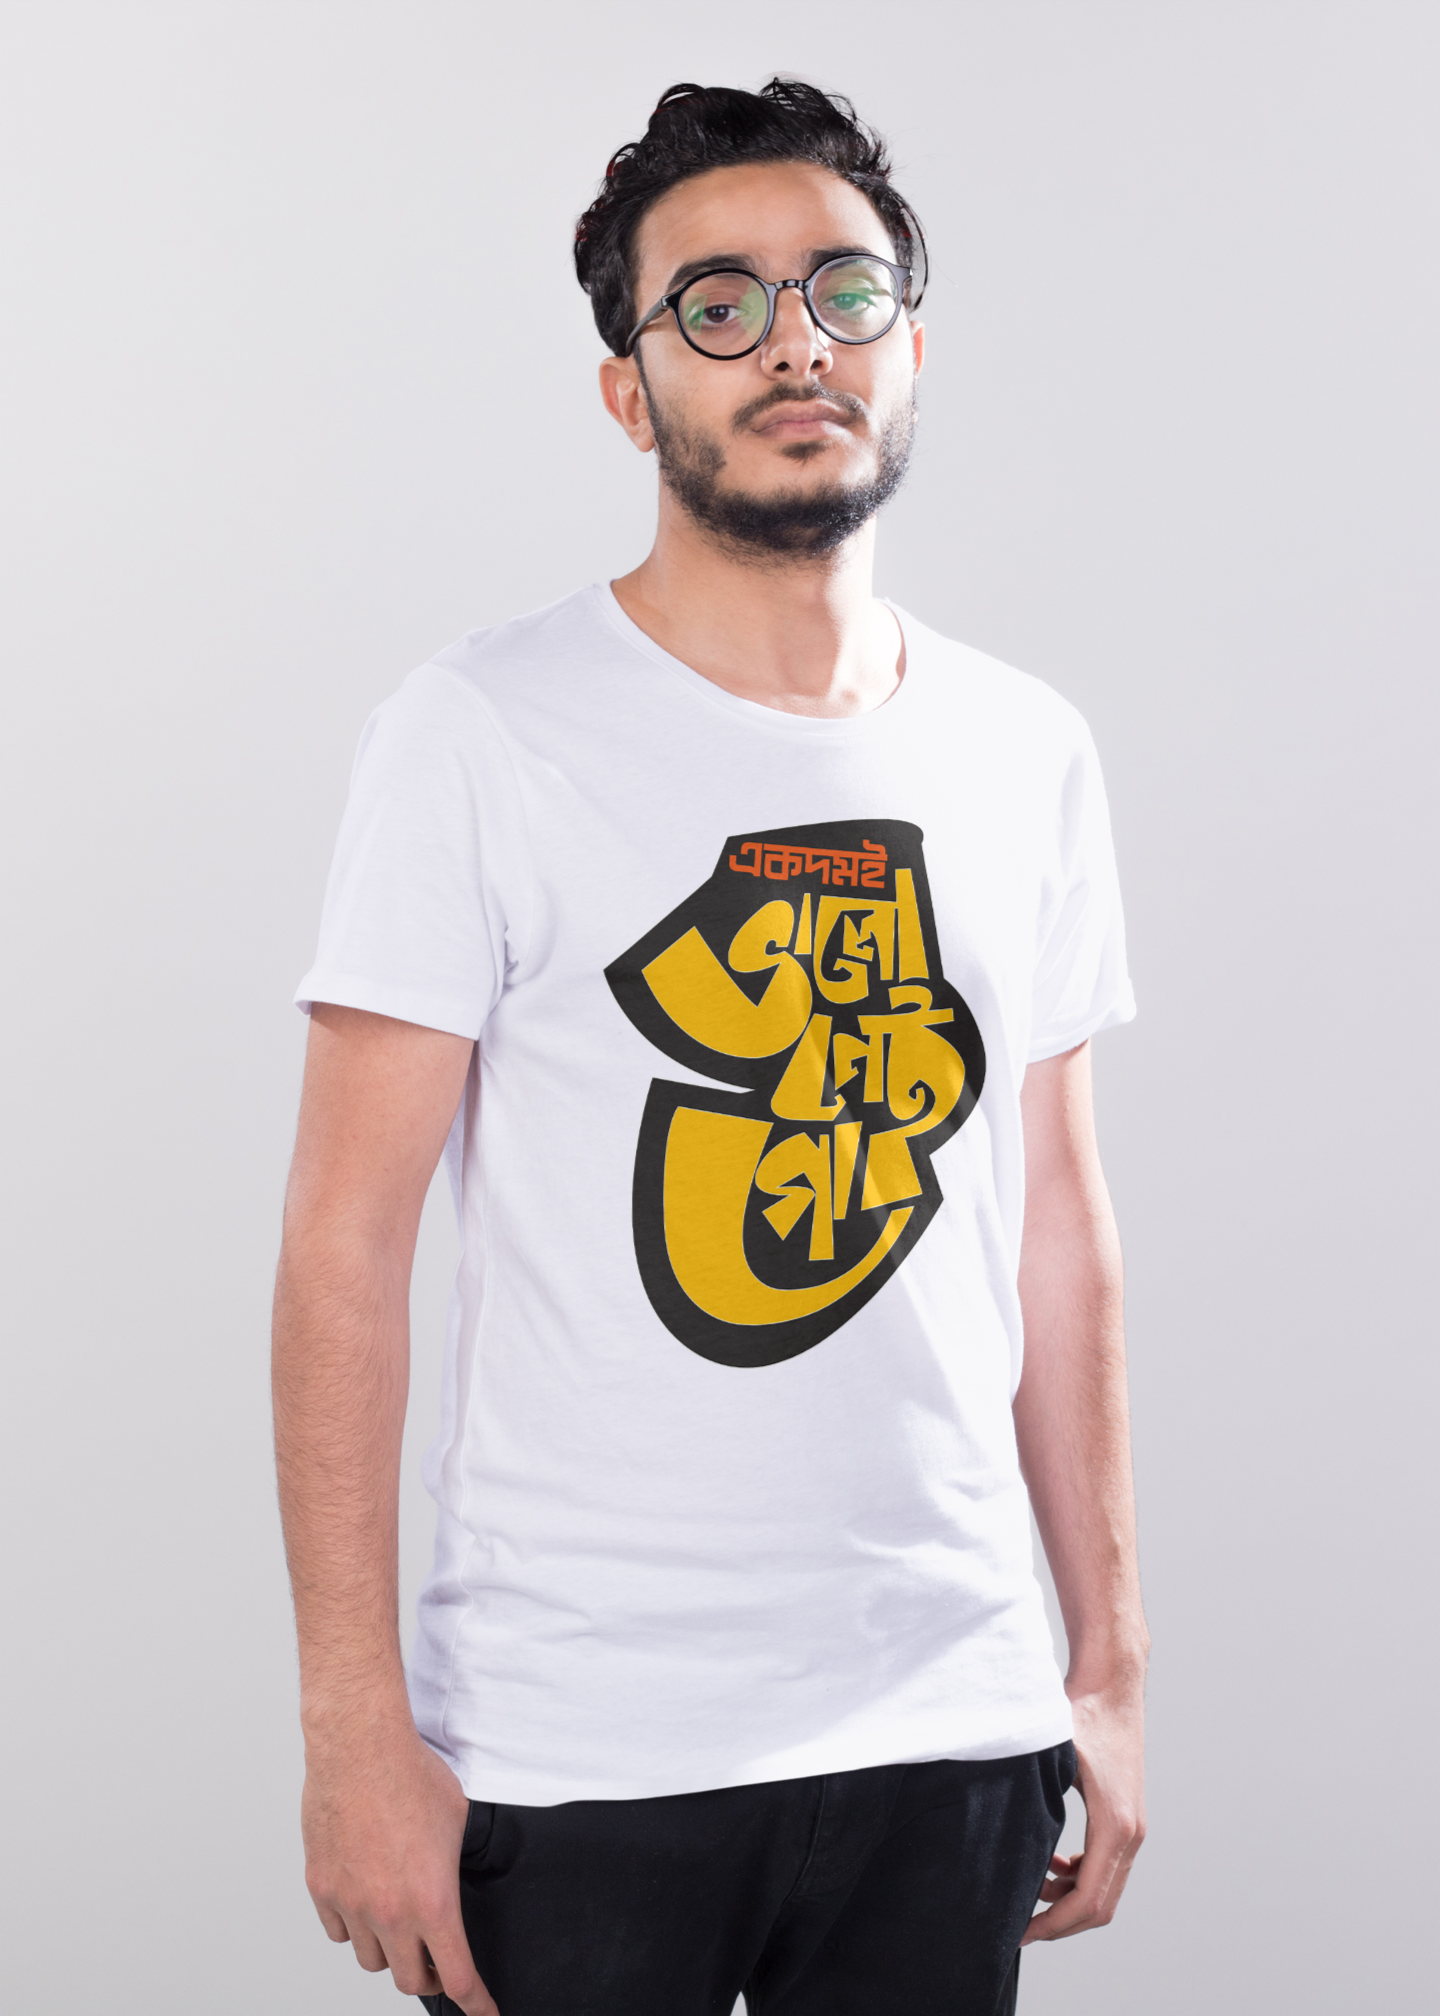 Bhalo nei go bengali Printed Half Sleeve Premium Cotton T-shirt For Men